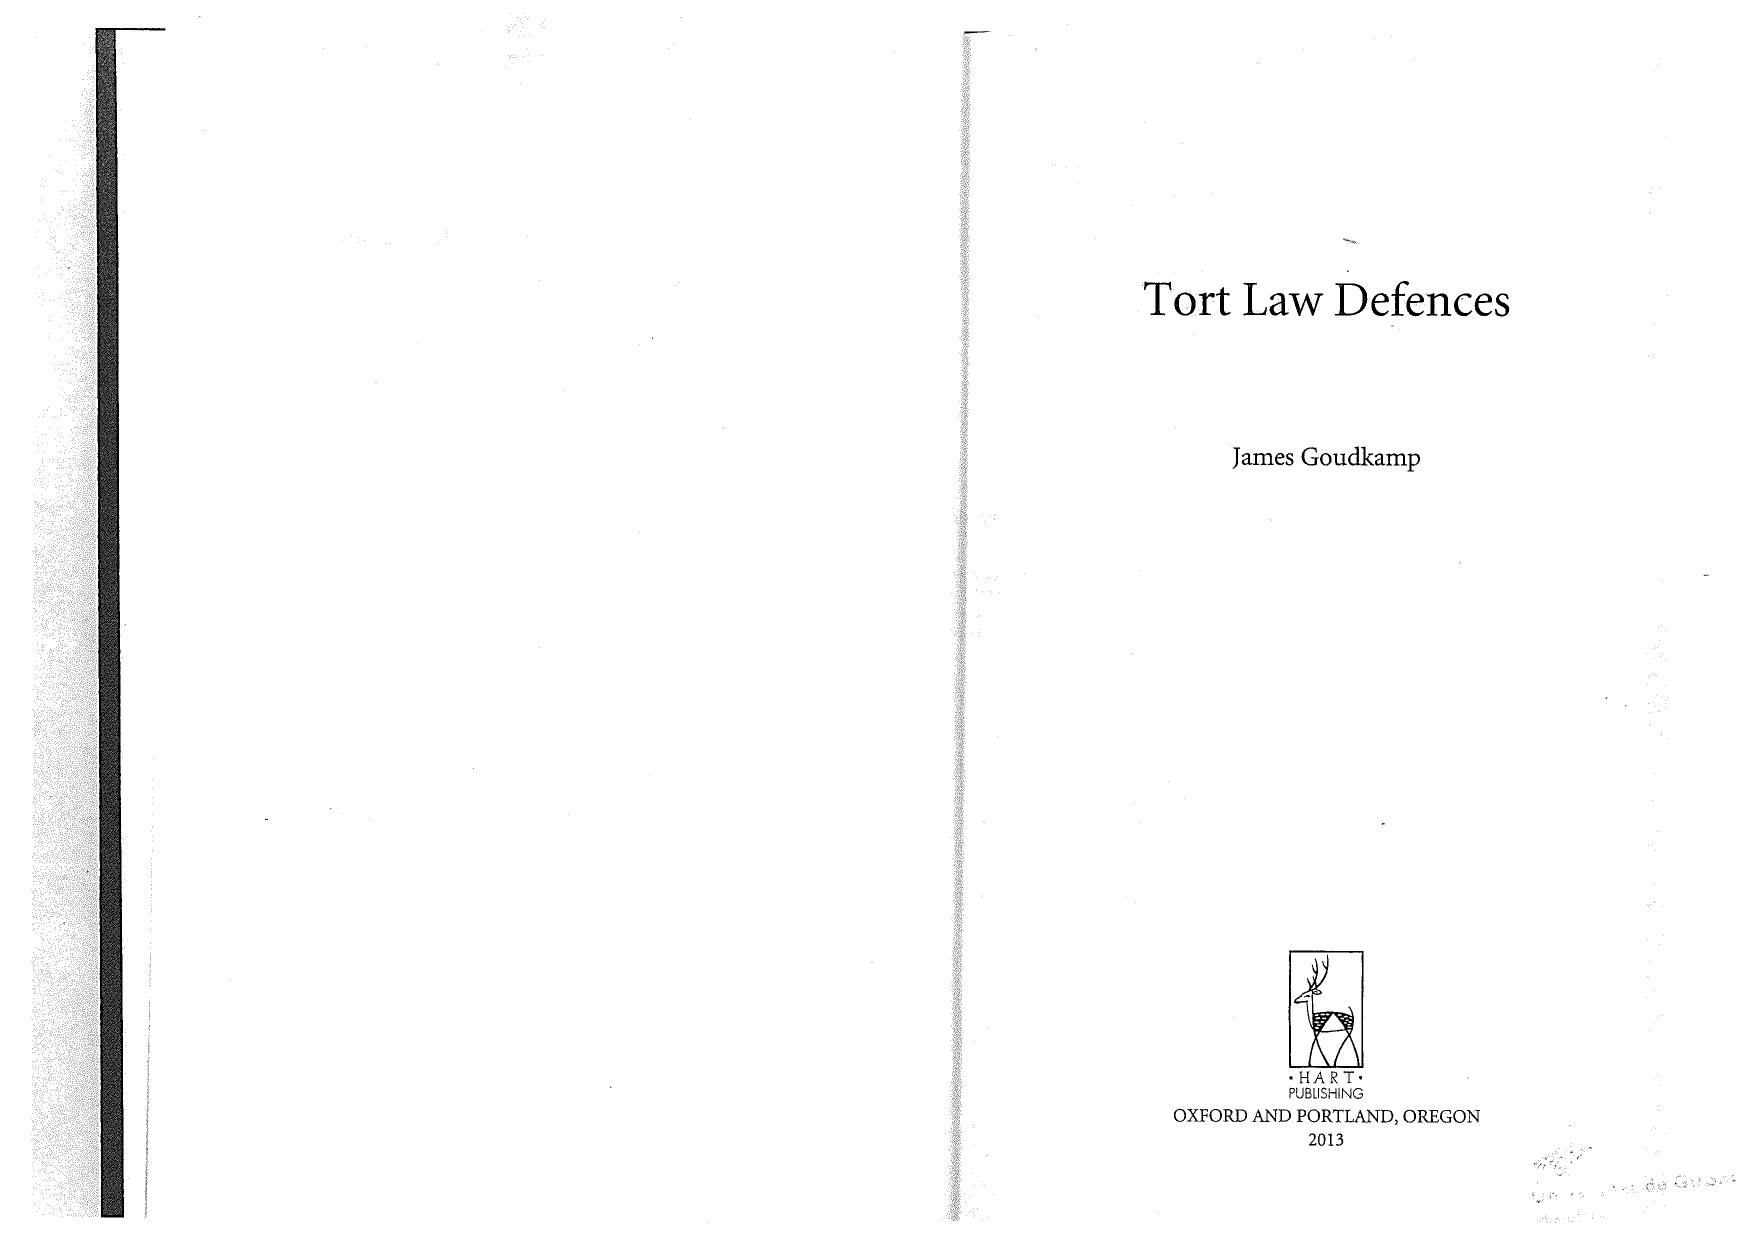 Tort law defences by James Goudkamp